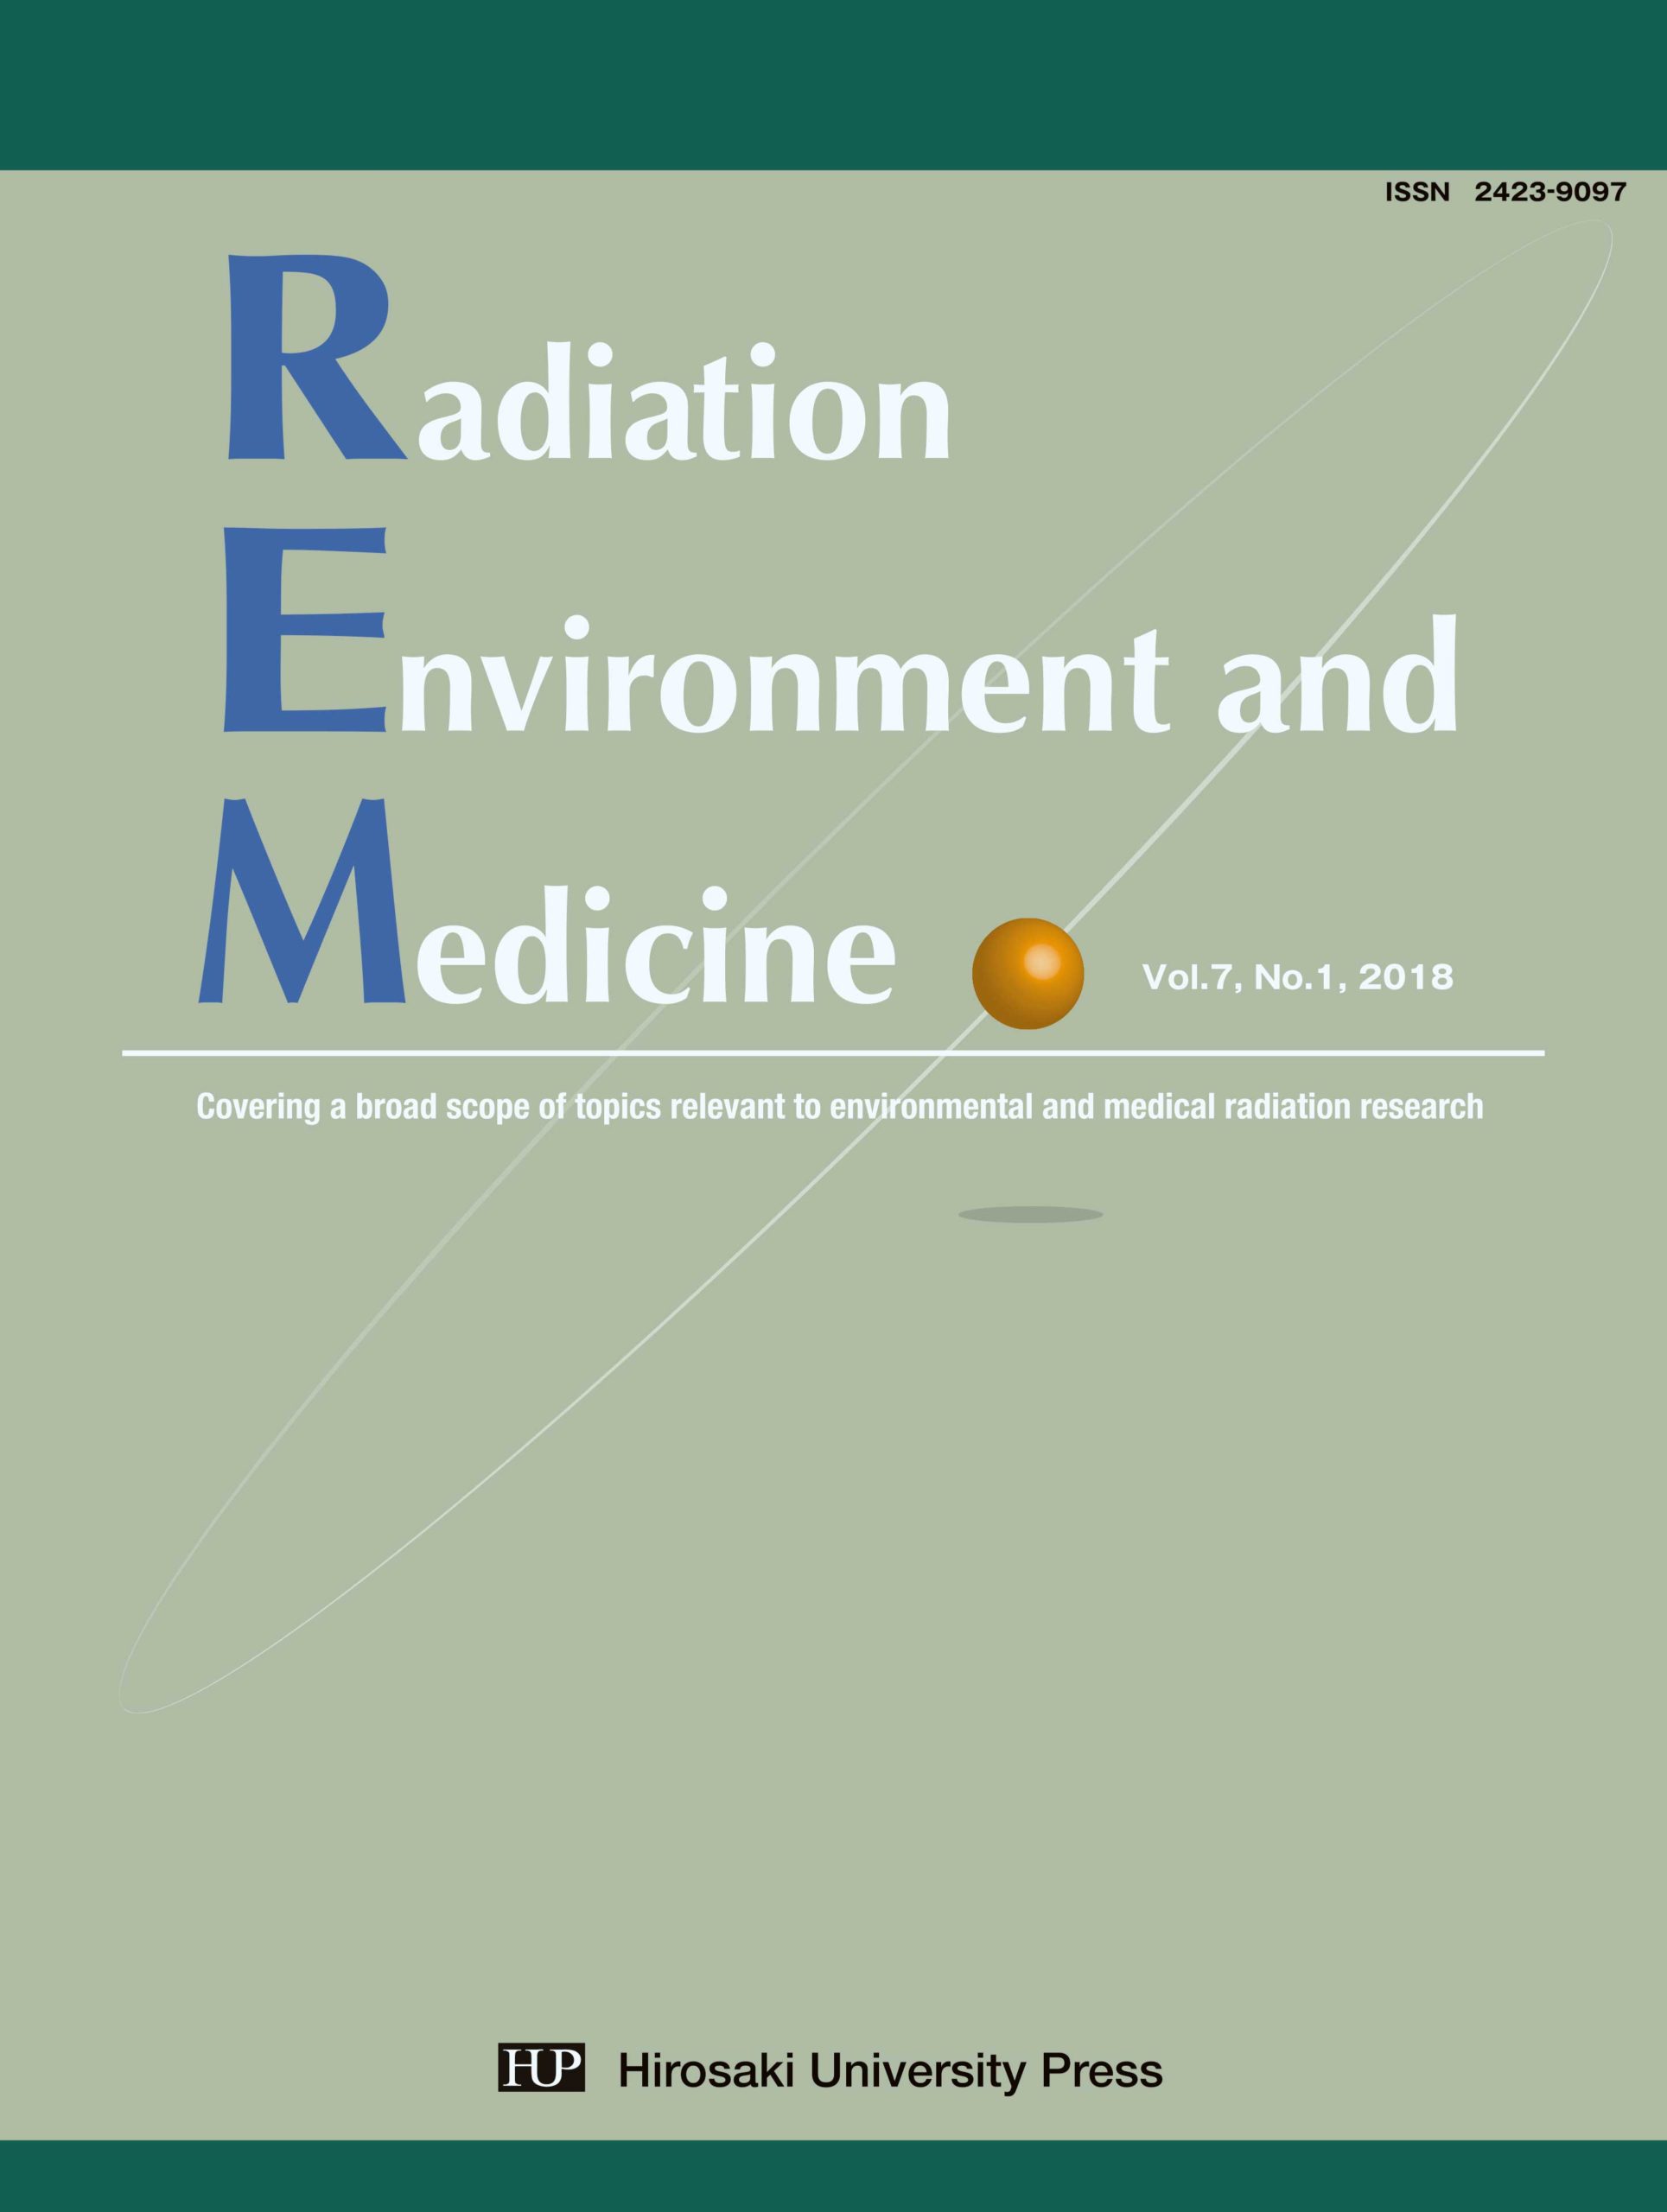 Radiation Environment and Medicine Vol.7, No.1 cover